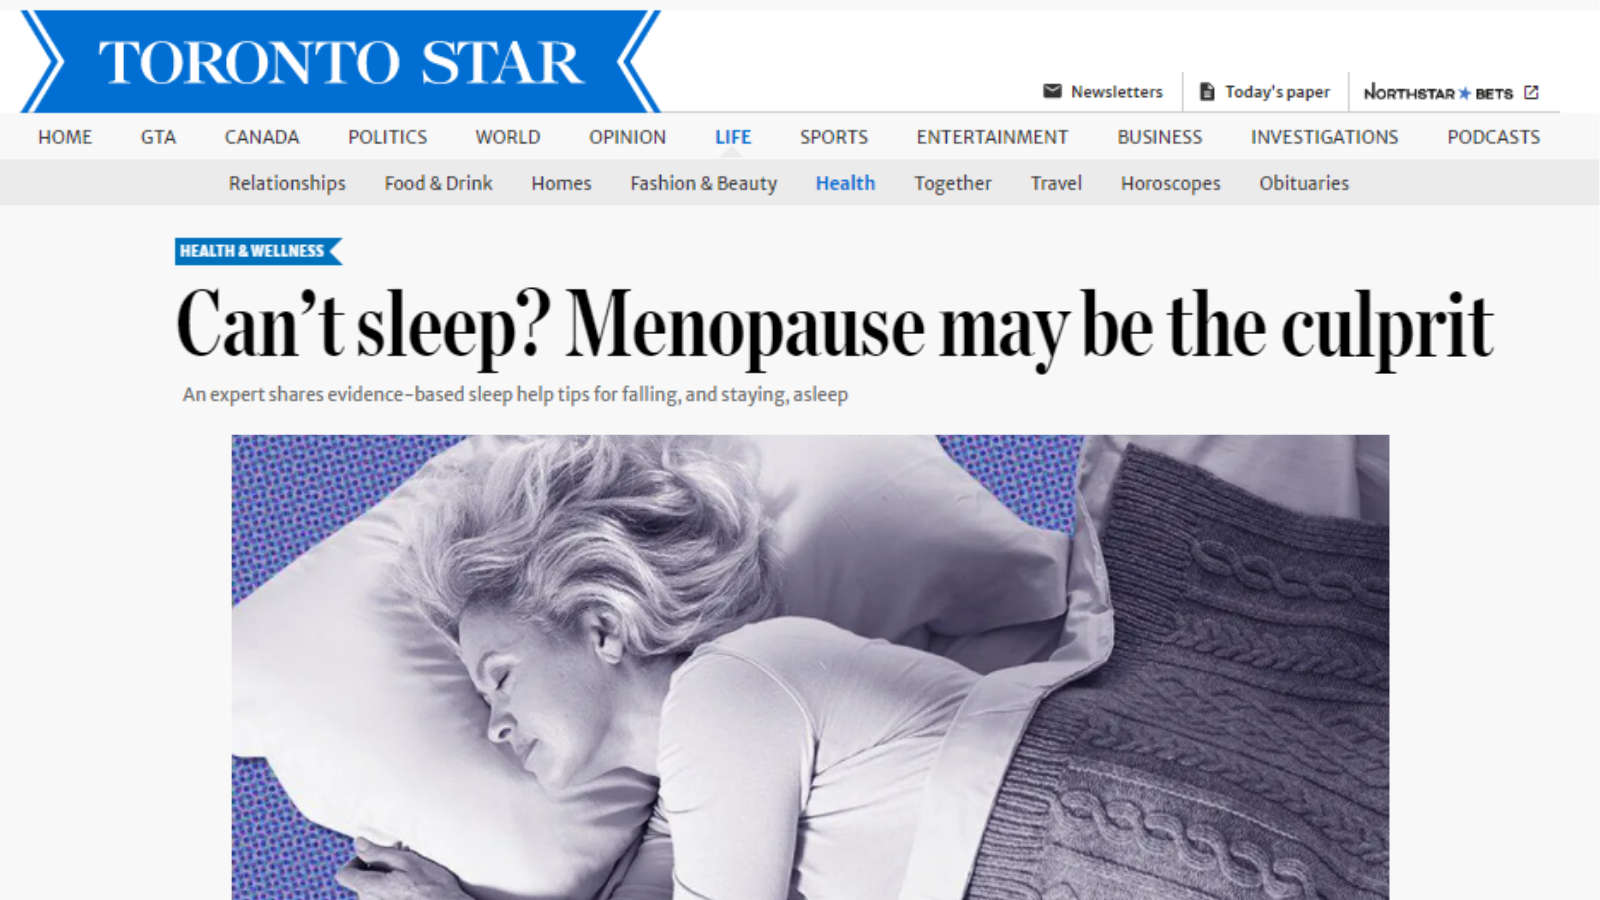 Toronto Star - Can’t sleep? Menopause may be the culprit